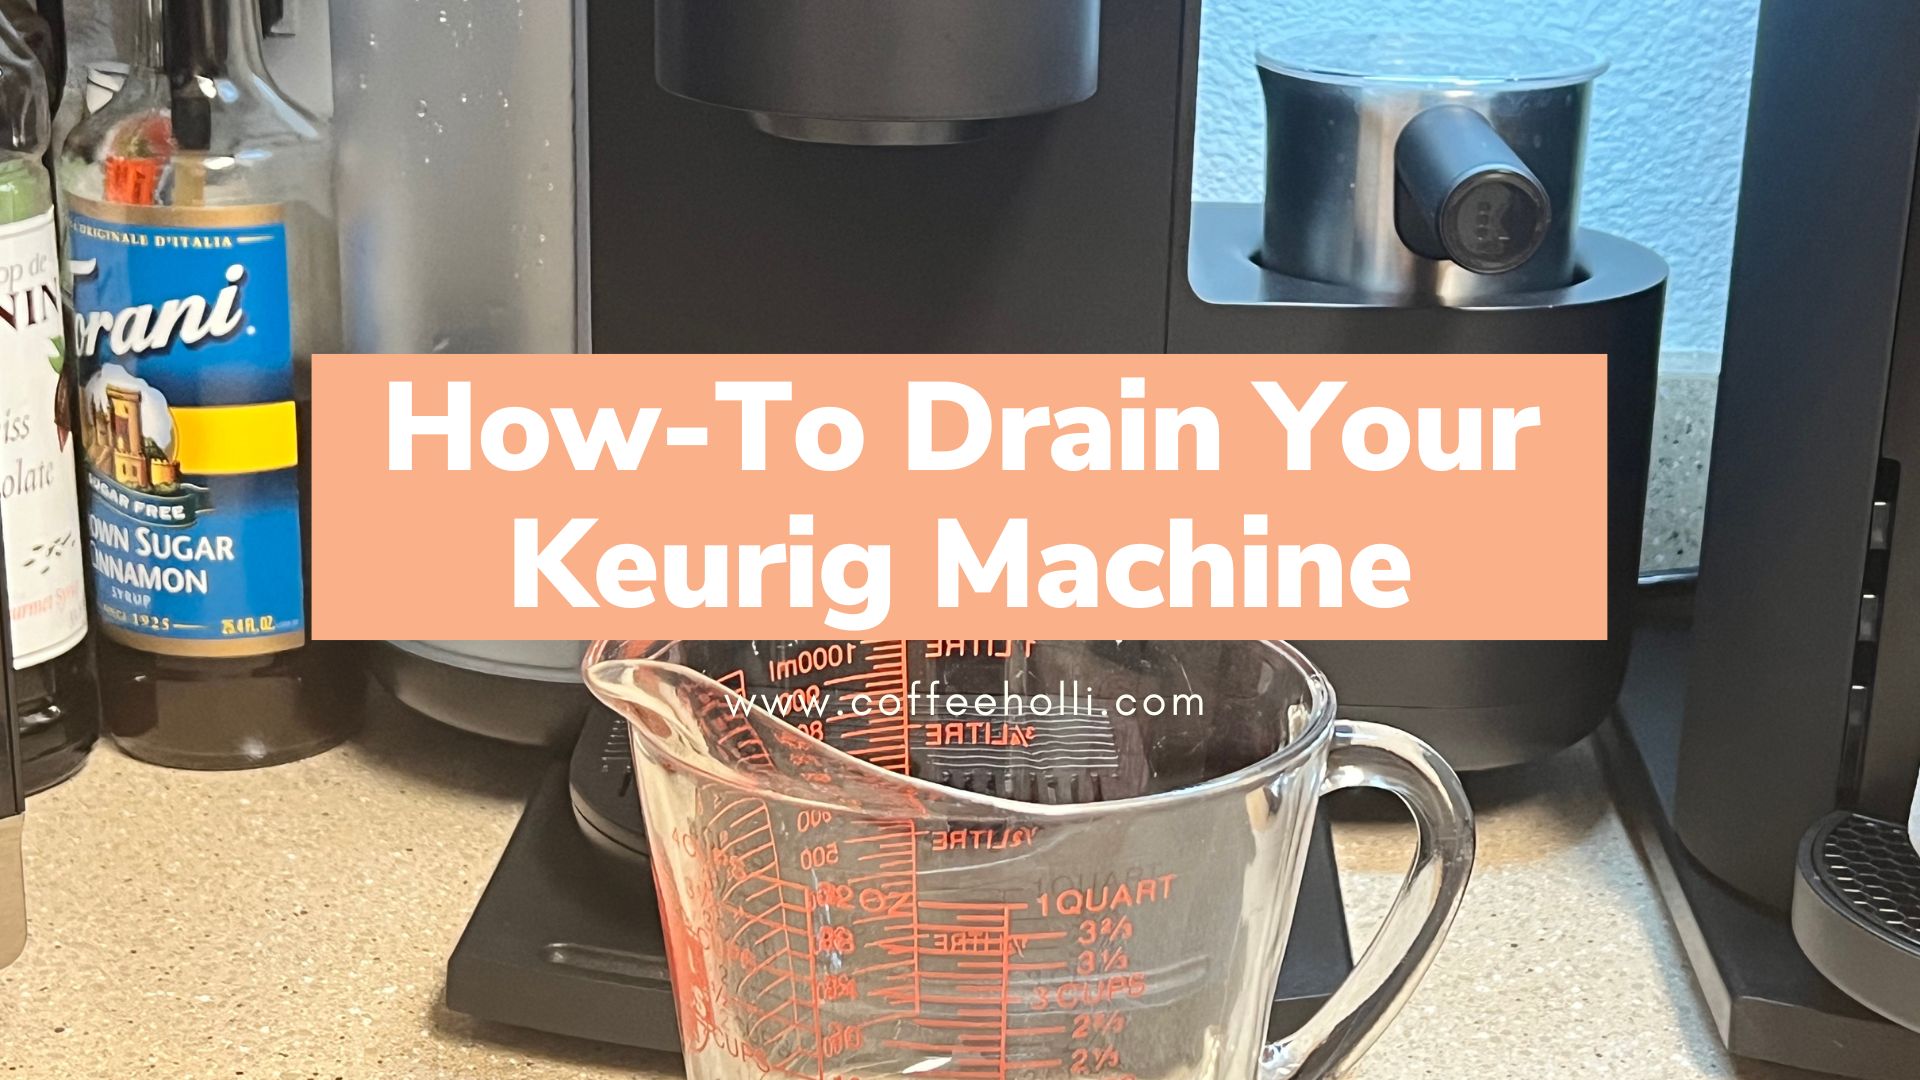 How-To Drain Your Keurig Machine